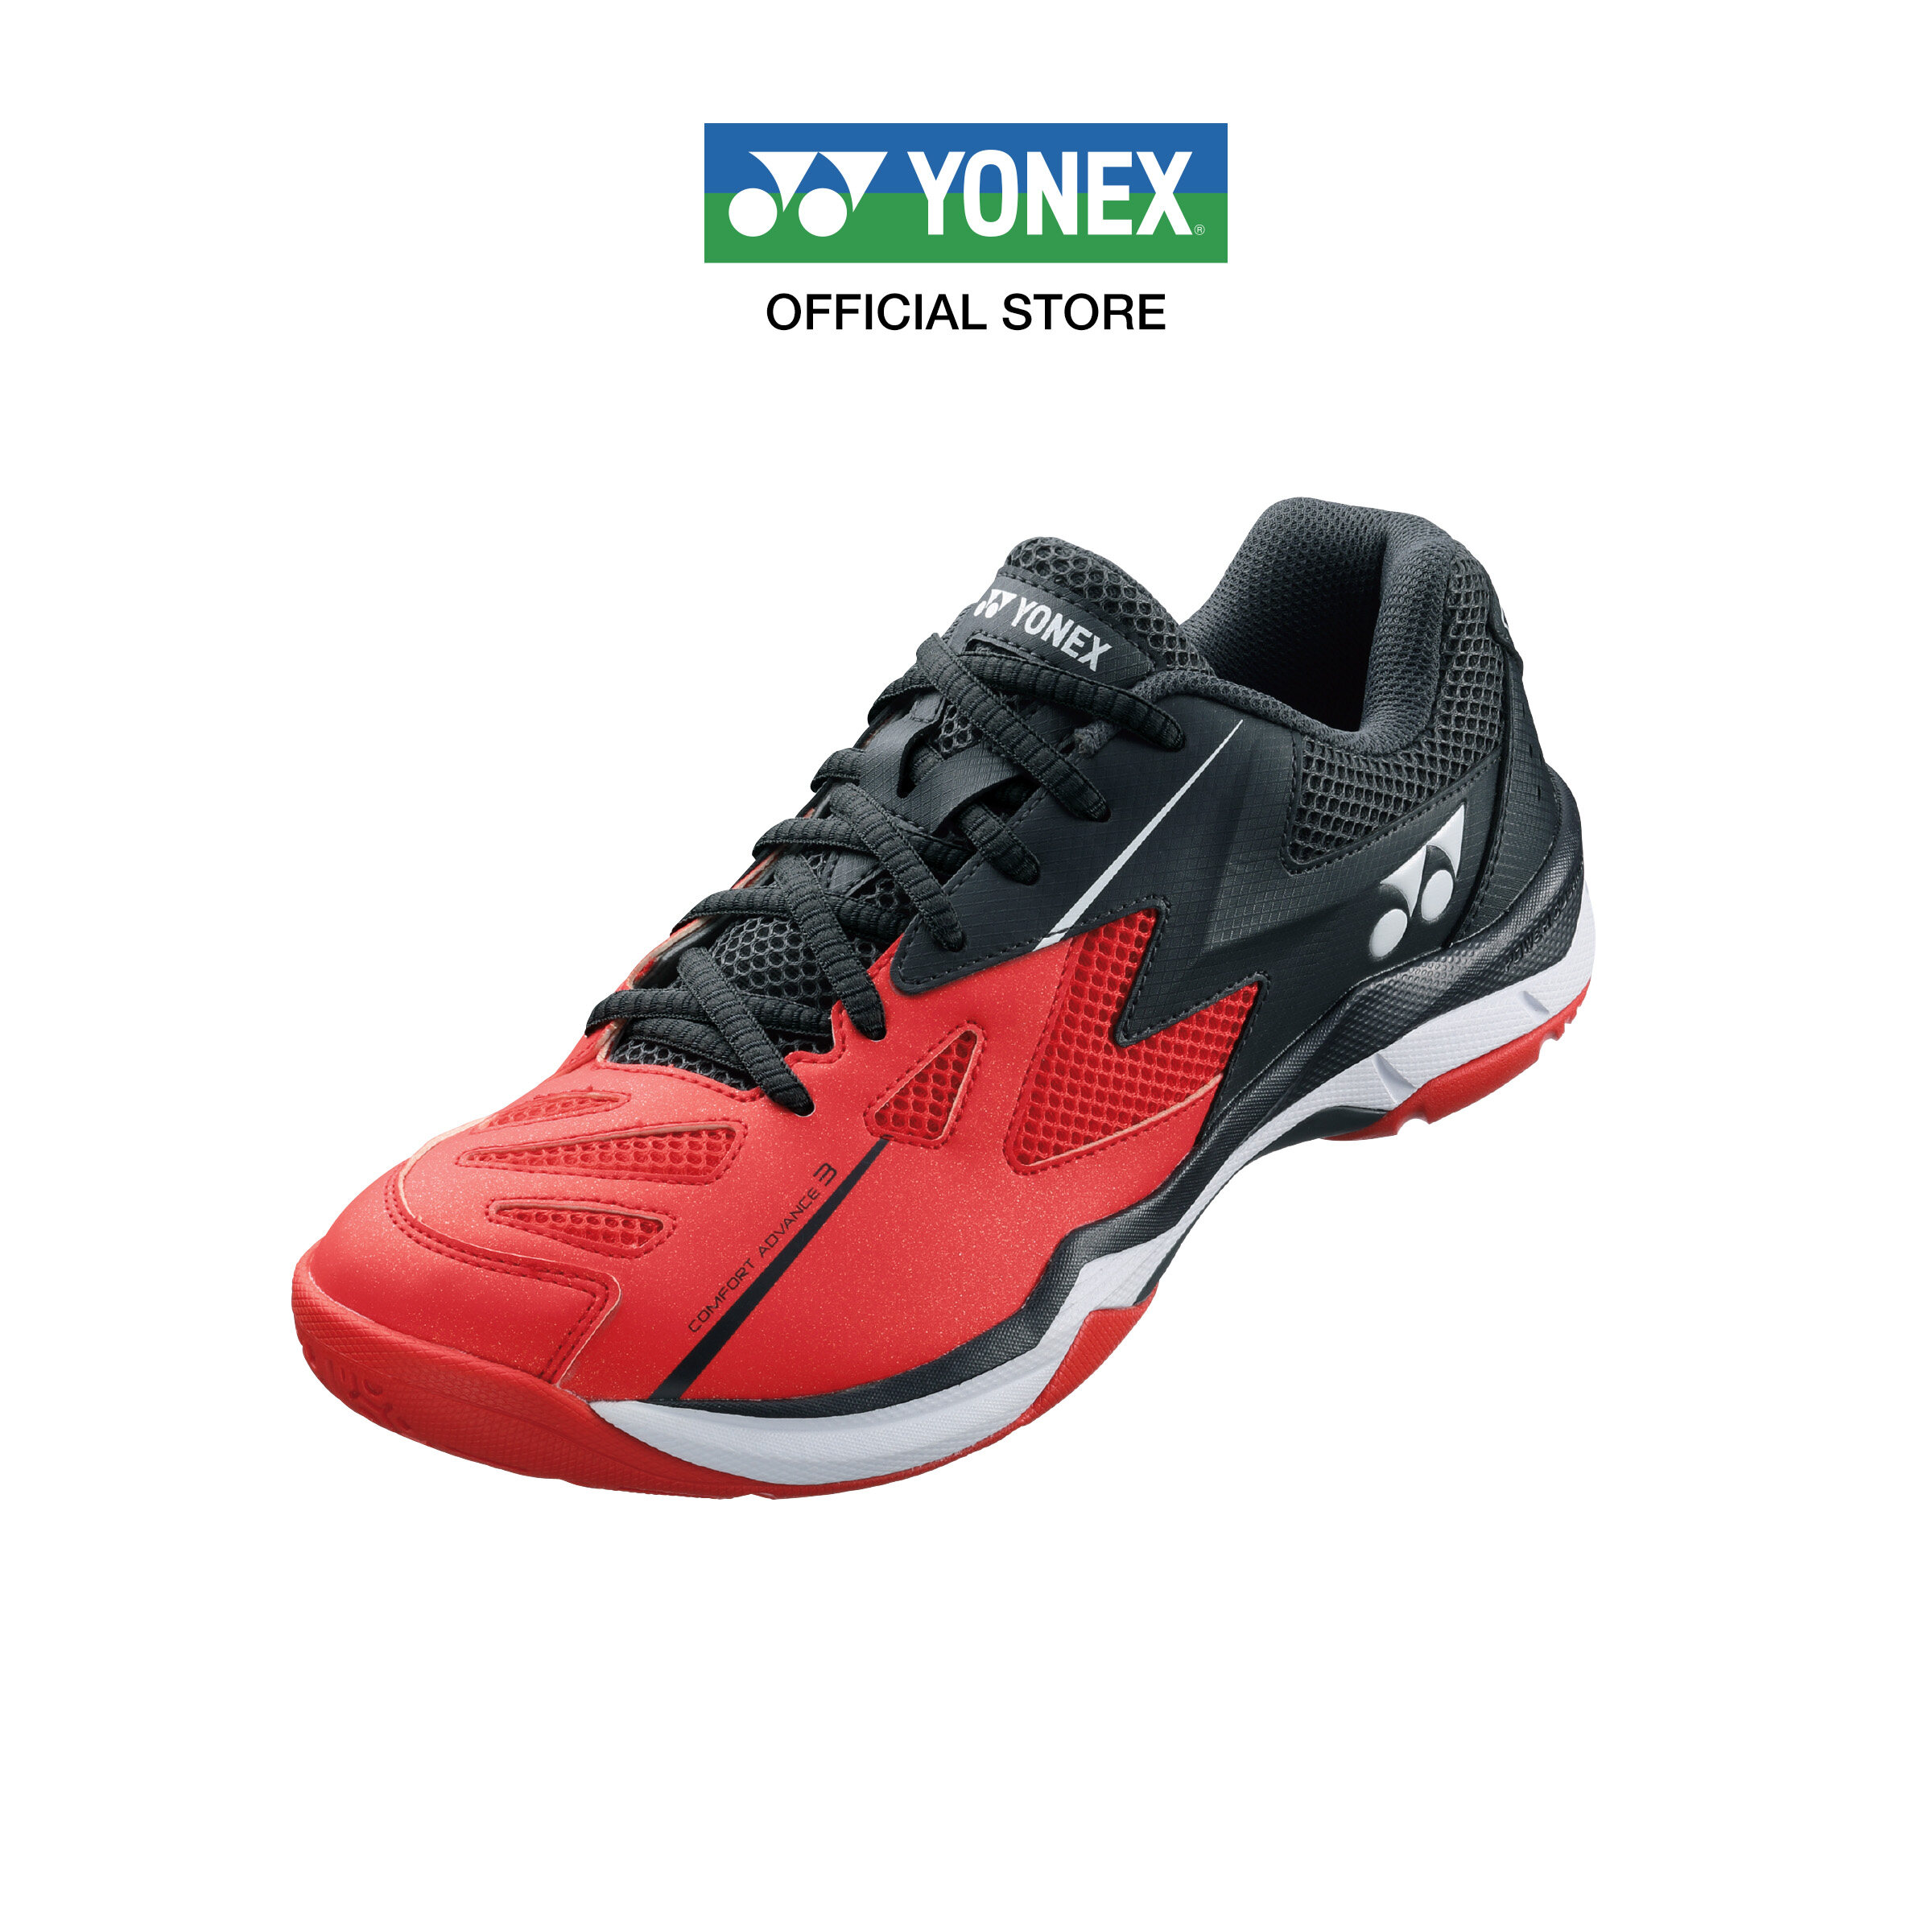 YONEX รุ่น POWER CUSHION COMFORT ADVANCE 3 (SHBCFA3) รองเท้าสำหรับผู้เริ่มต้นเล่นแบดมินตัน ต้องการรองเท้าที่ให้ความรู้สึกนุ่มสบาย